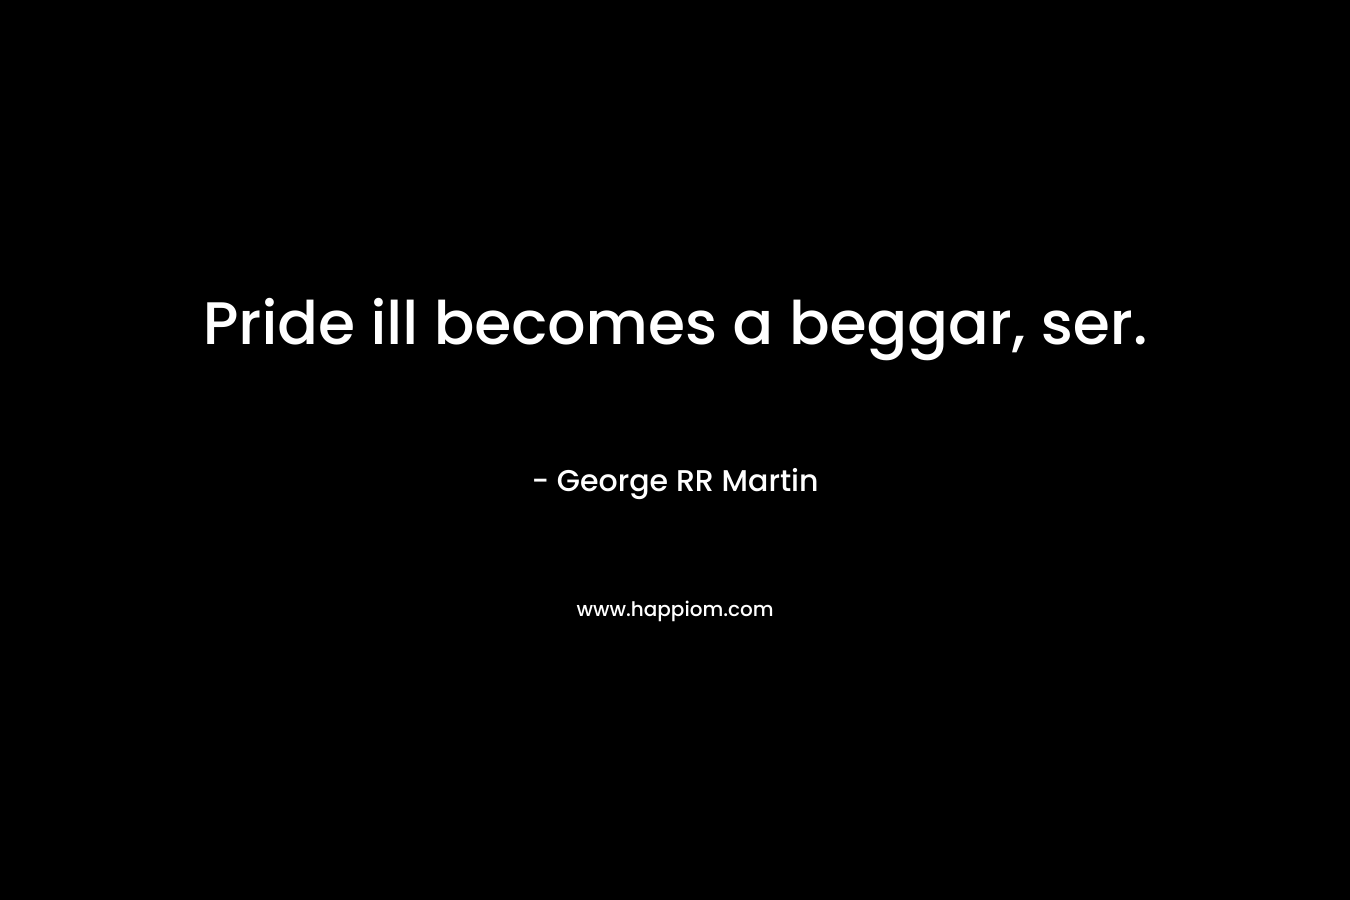 Pride ill becomes a beggar, ser.